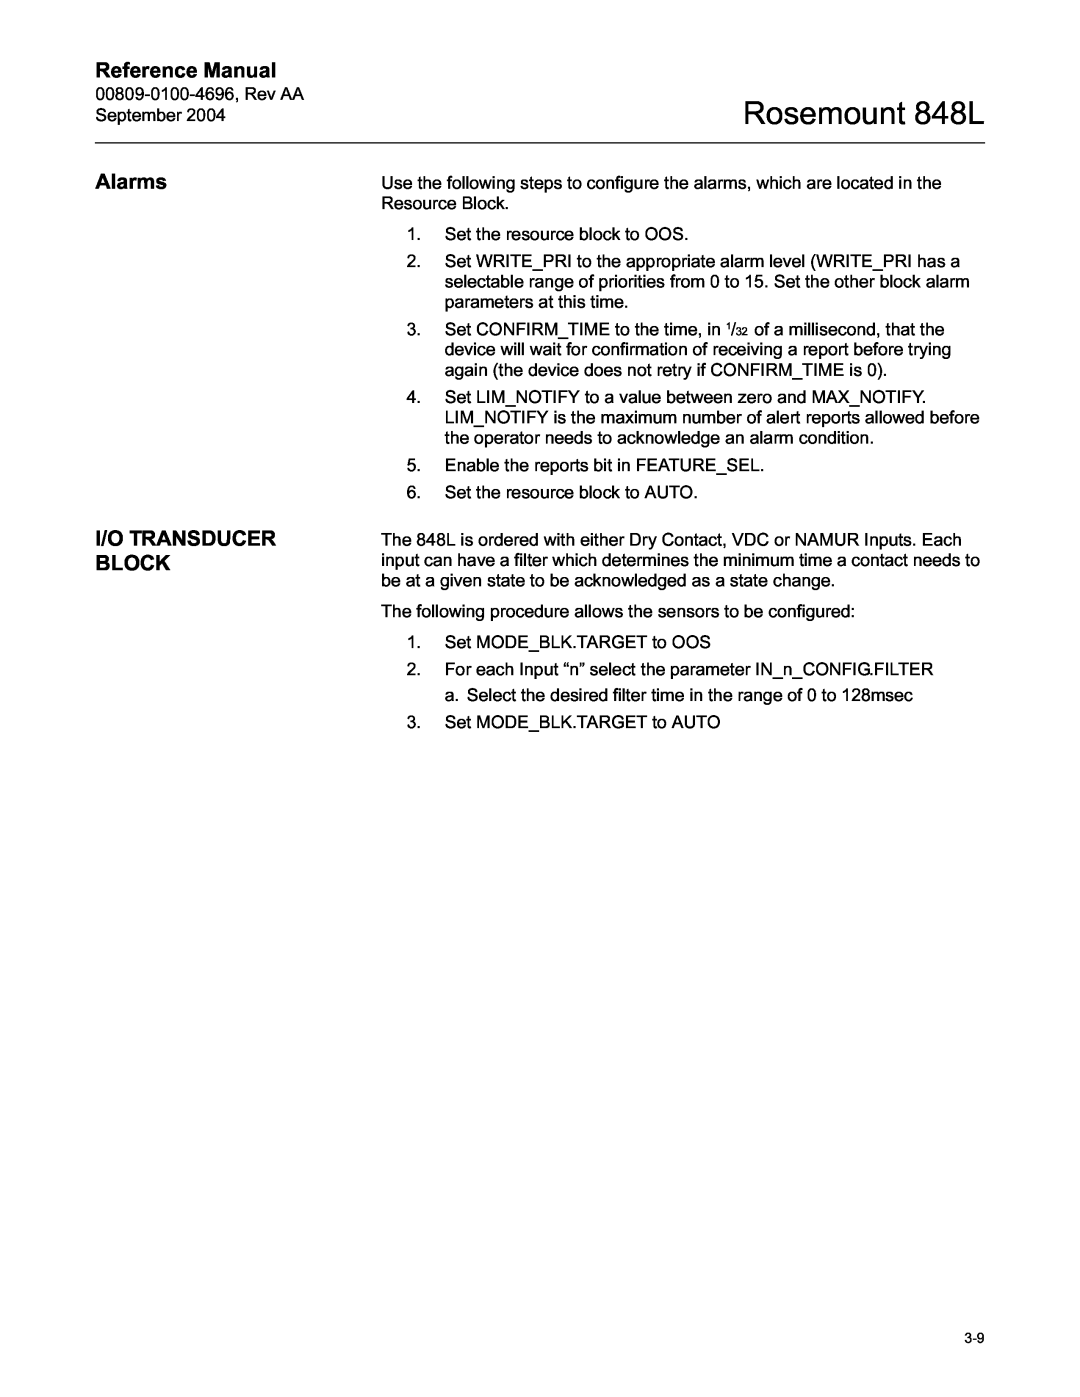 Emerson manual Alarms I/O TRANSDUCER BLOCK, Rosemount 848L, Reference Manual 